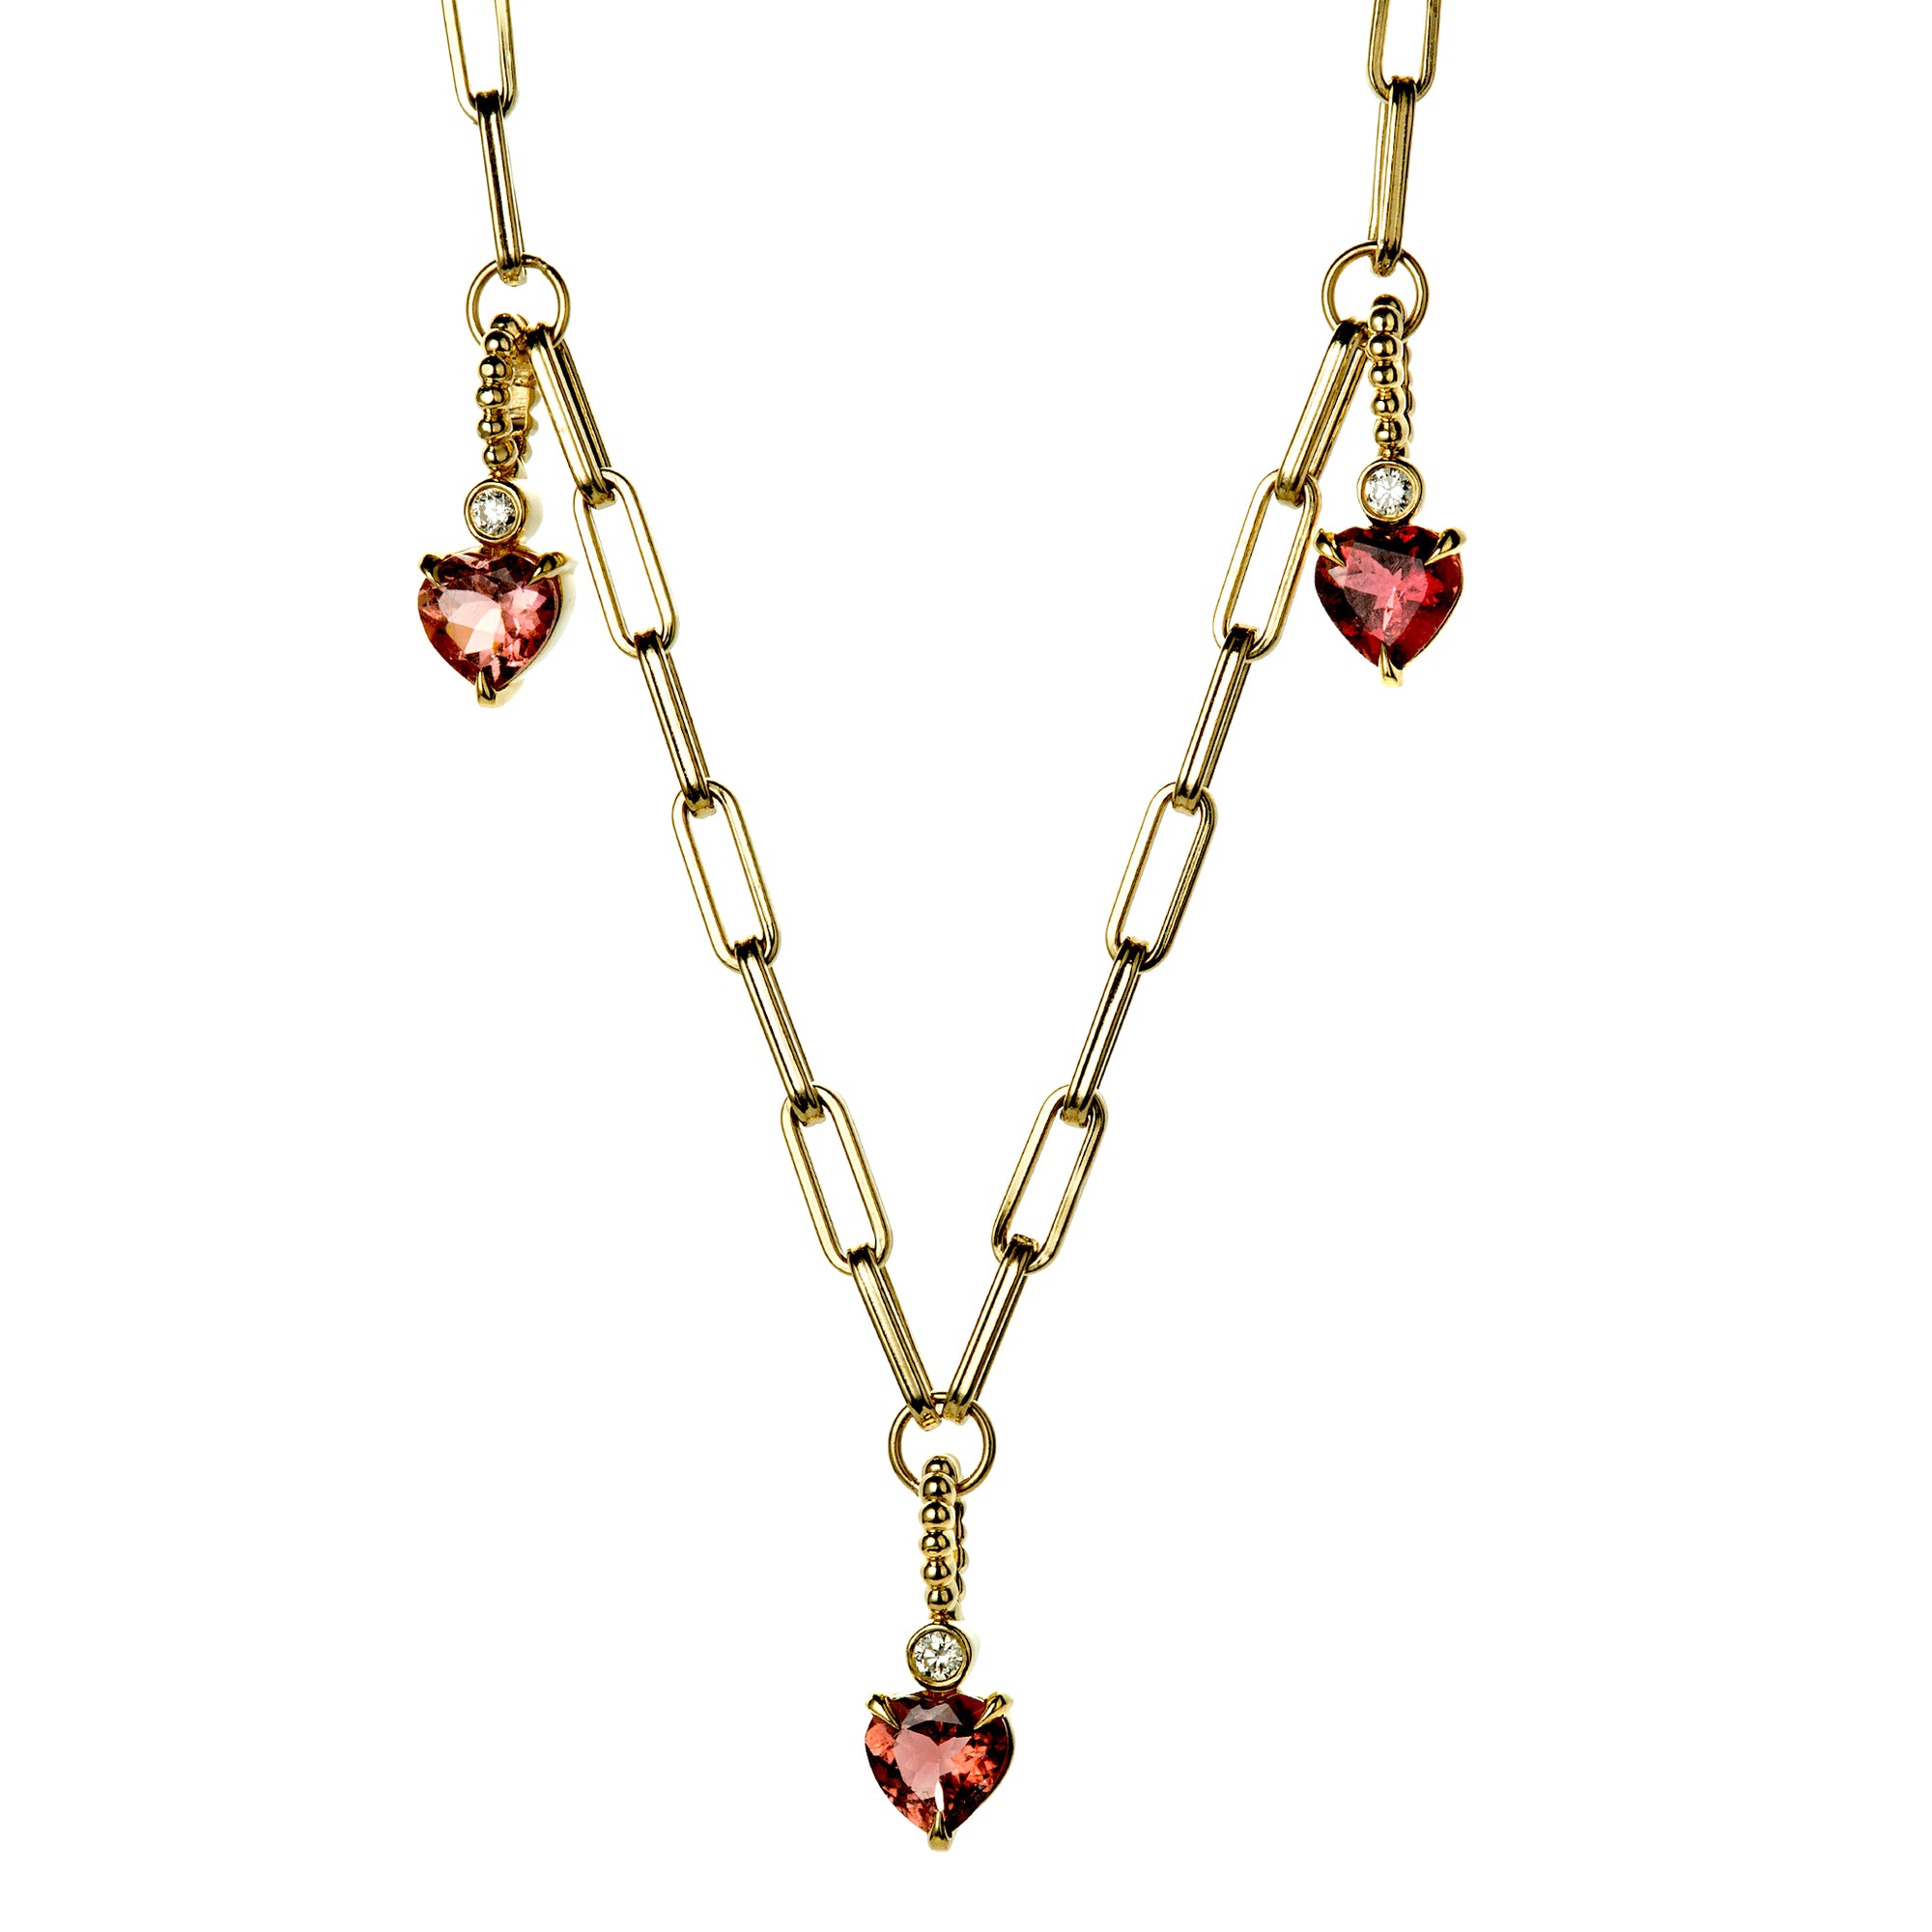 Three of Hearts charm necklace